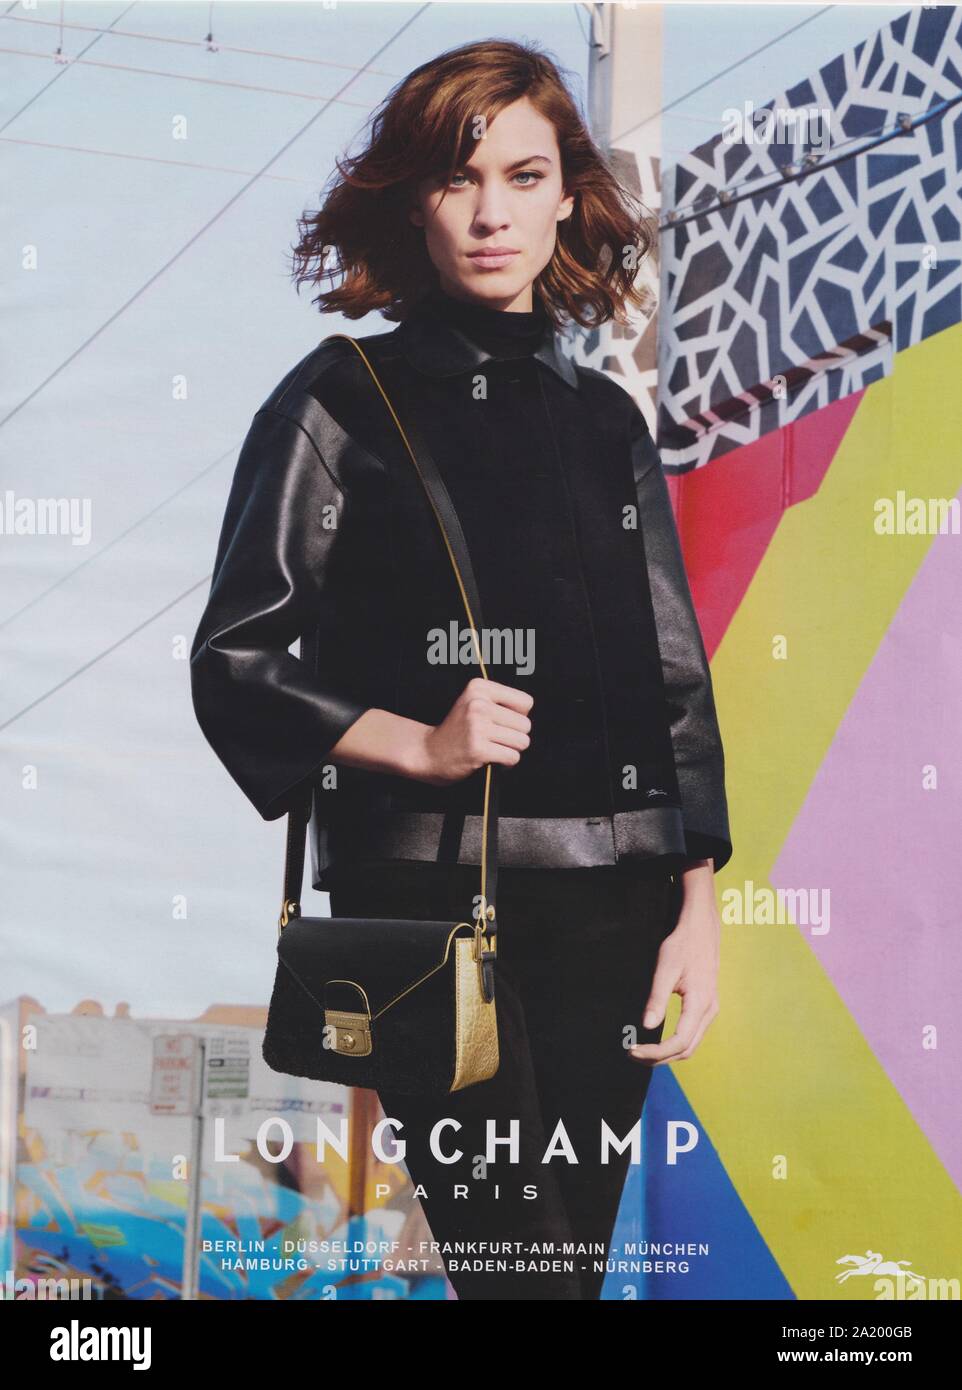 Alexa Chung Longchamp 2016 Fall/Winter Campaign